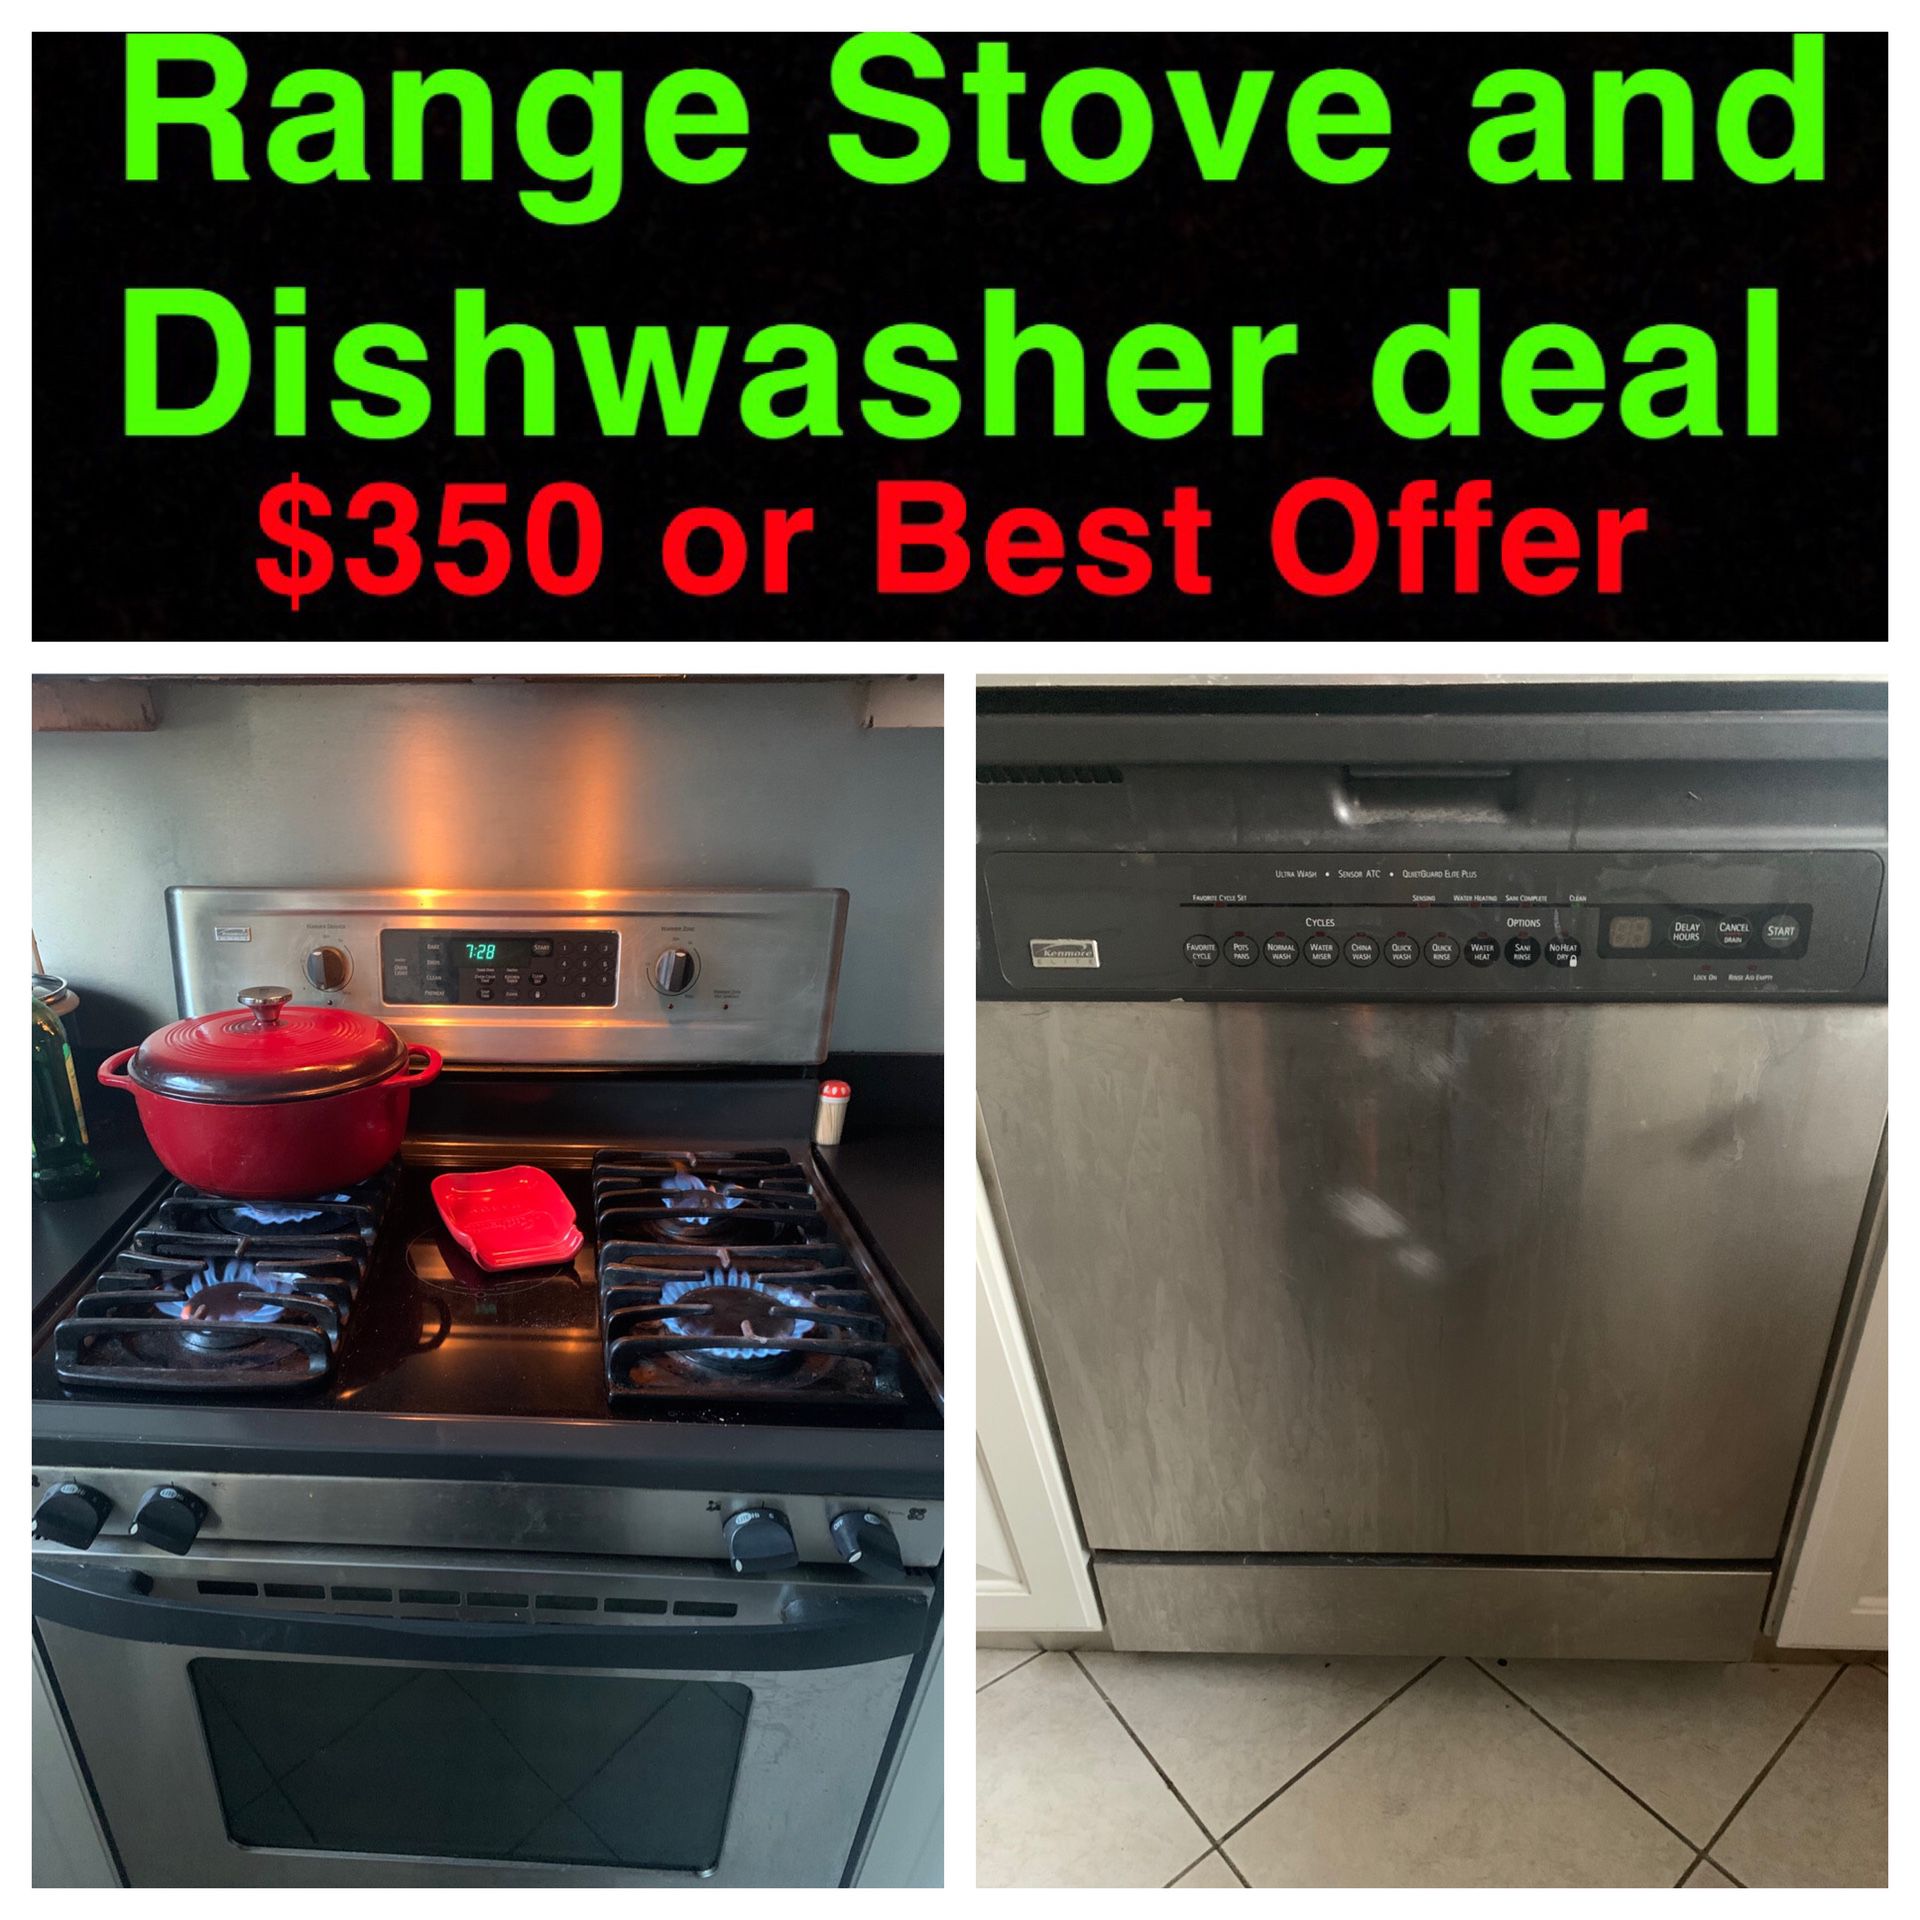 Range Stove and Dishwasher $350 or BEST OFFER